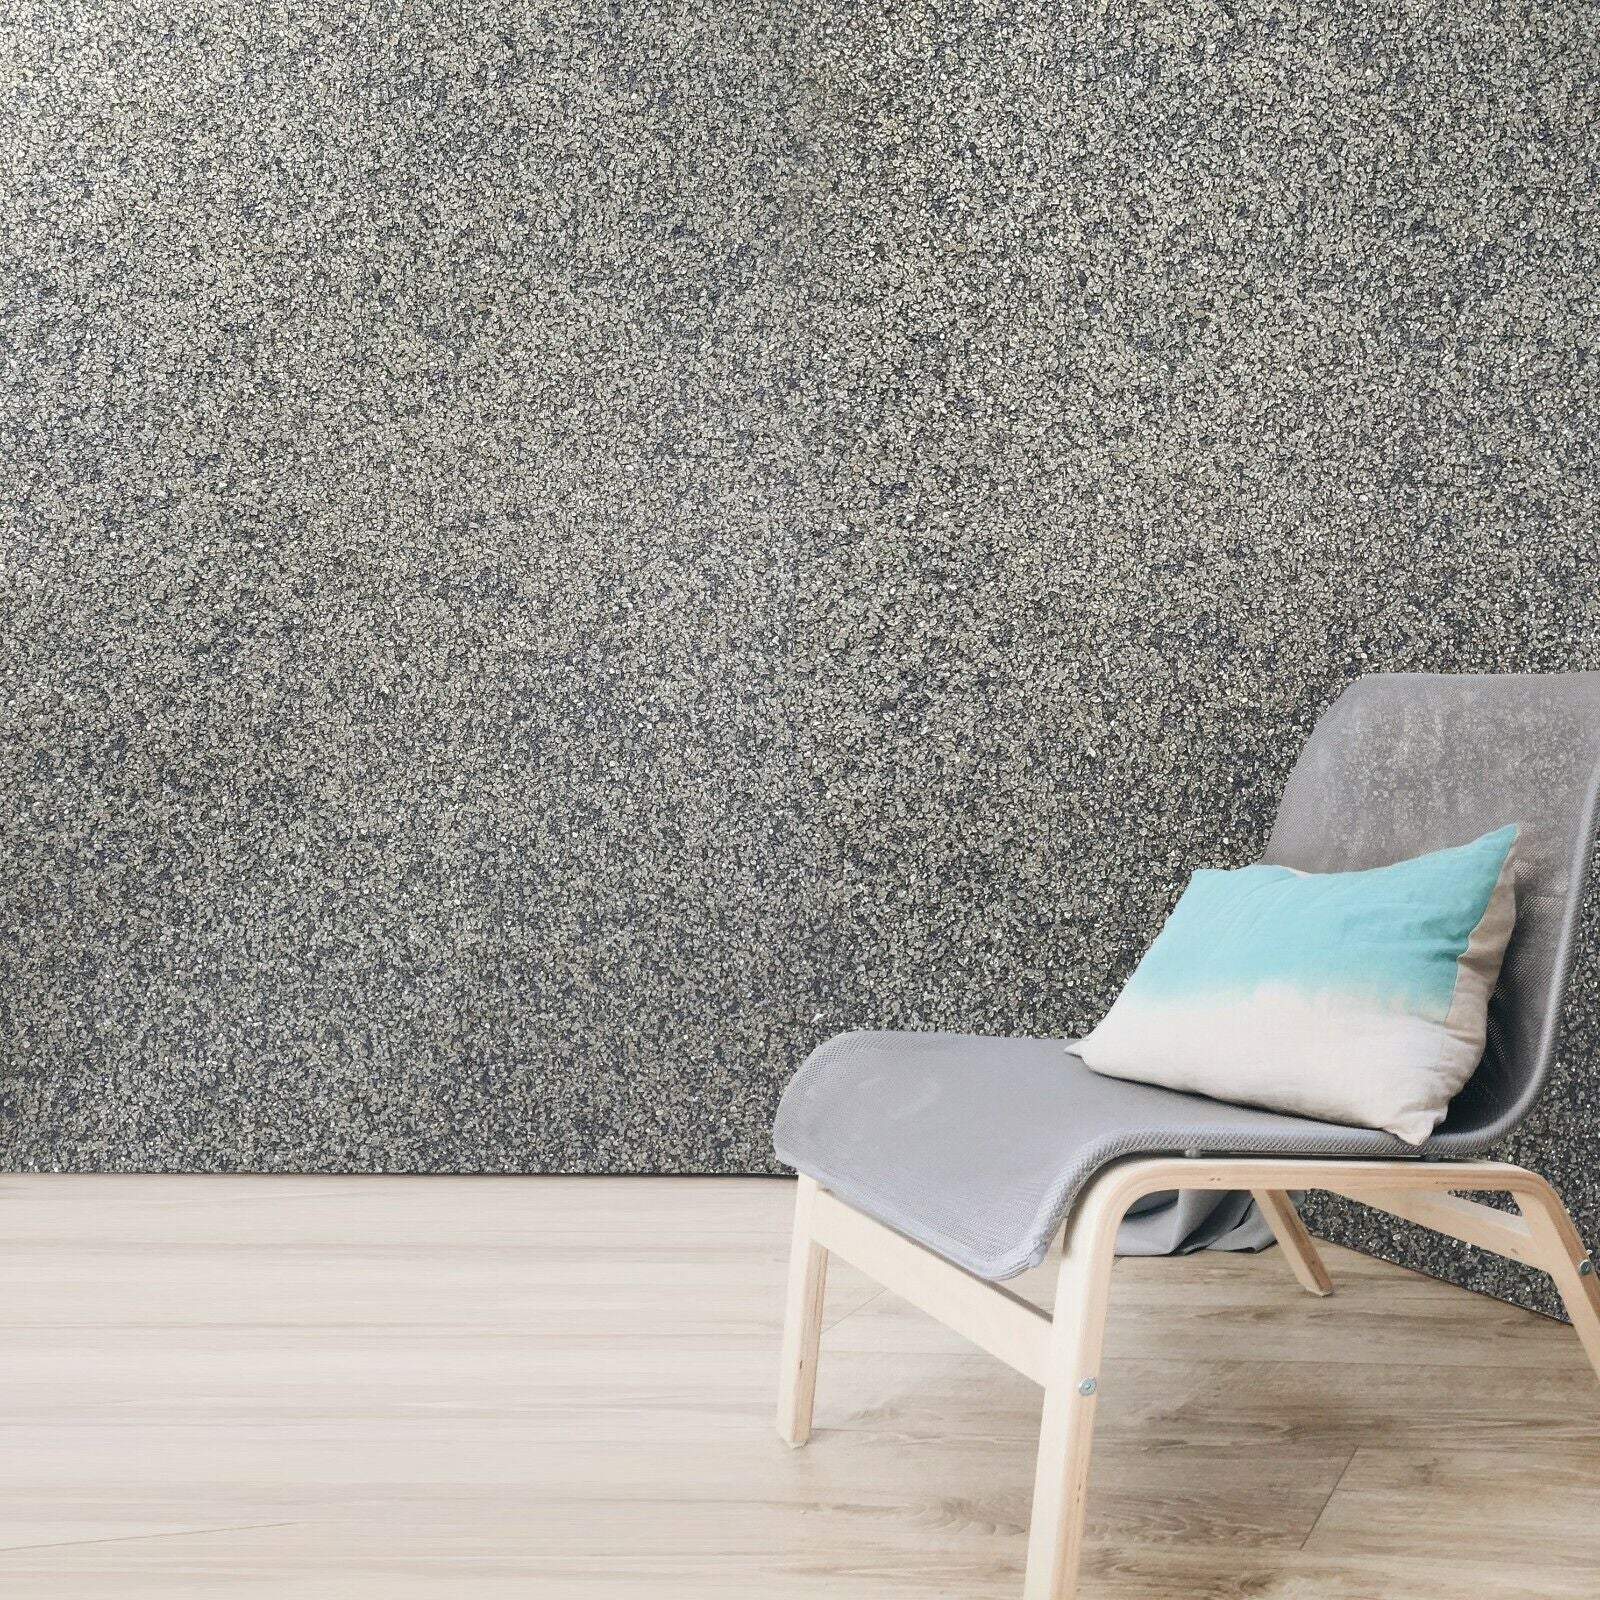 Grey Glitter Wallpaper